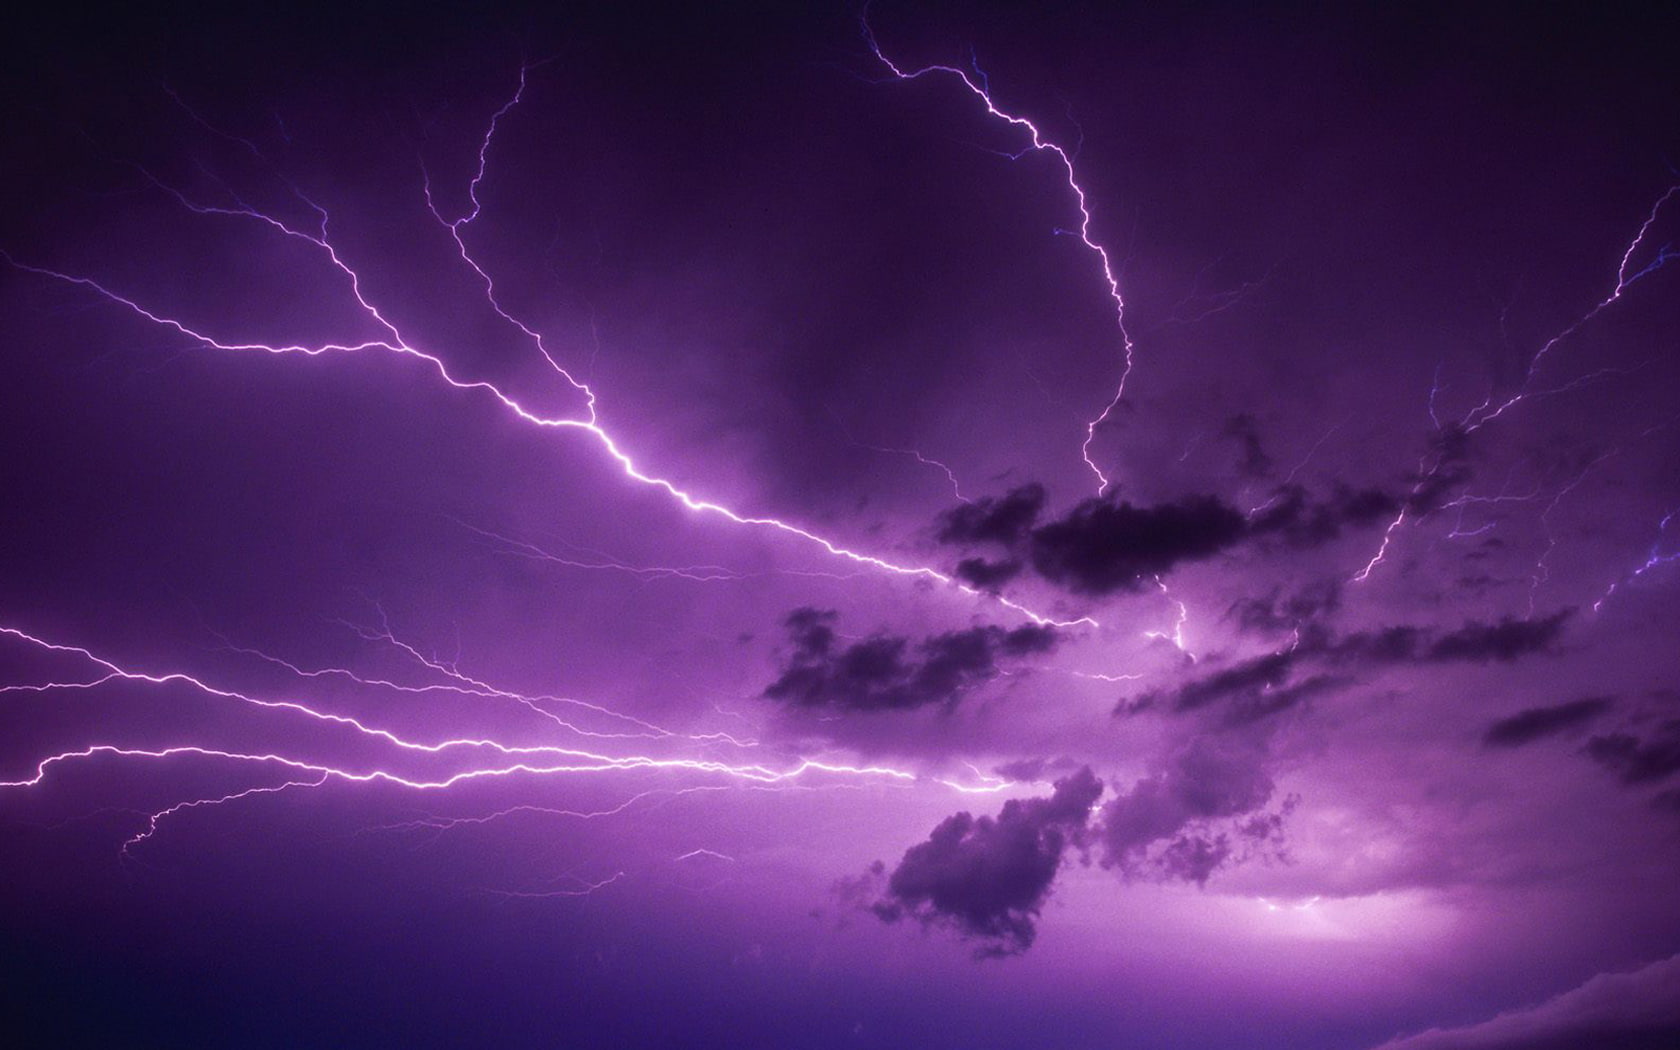 lightning, nature, purple, storm, power in nature, cloud - sky